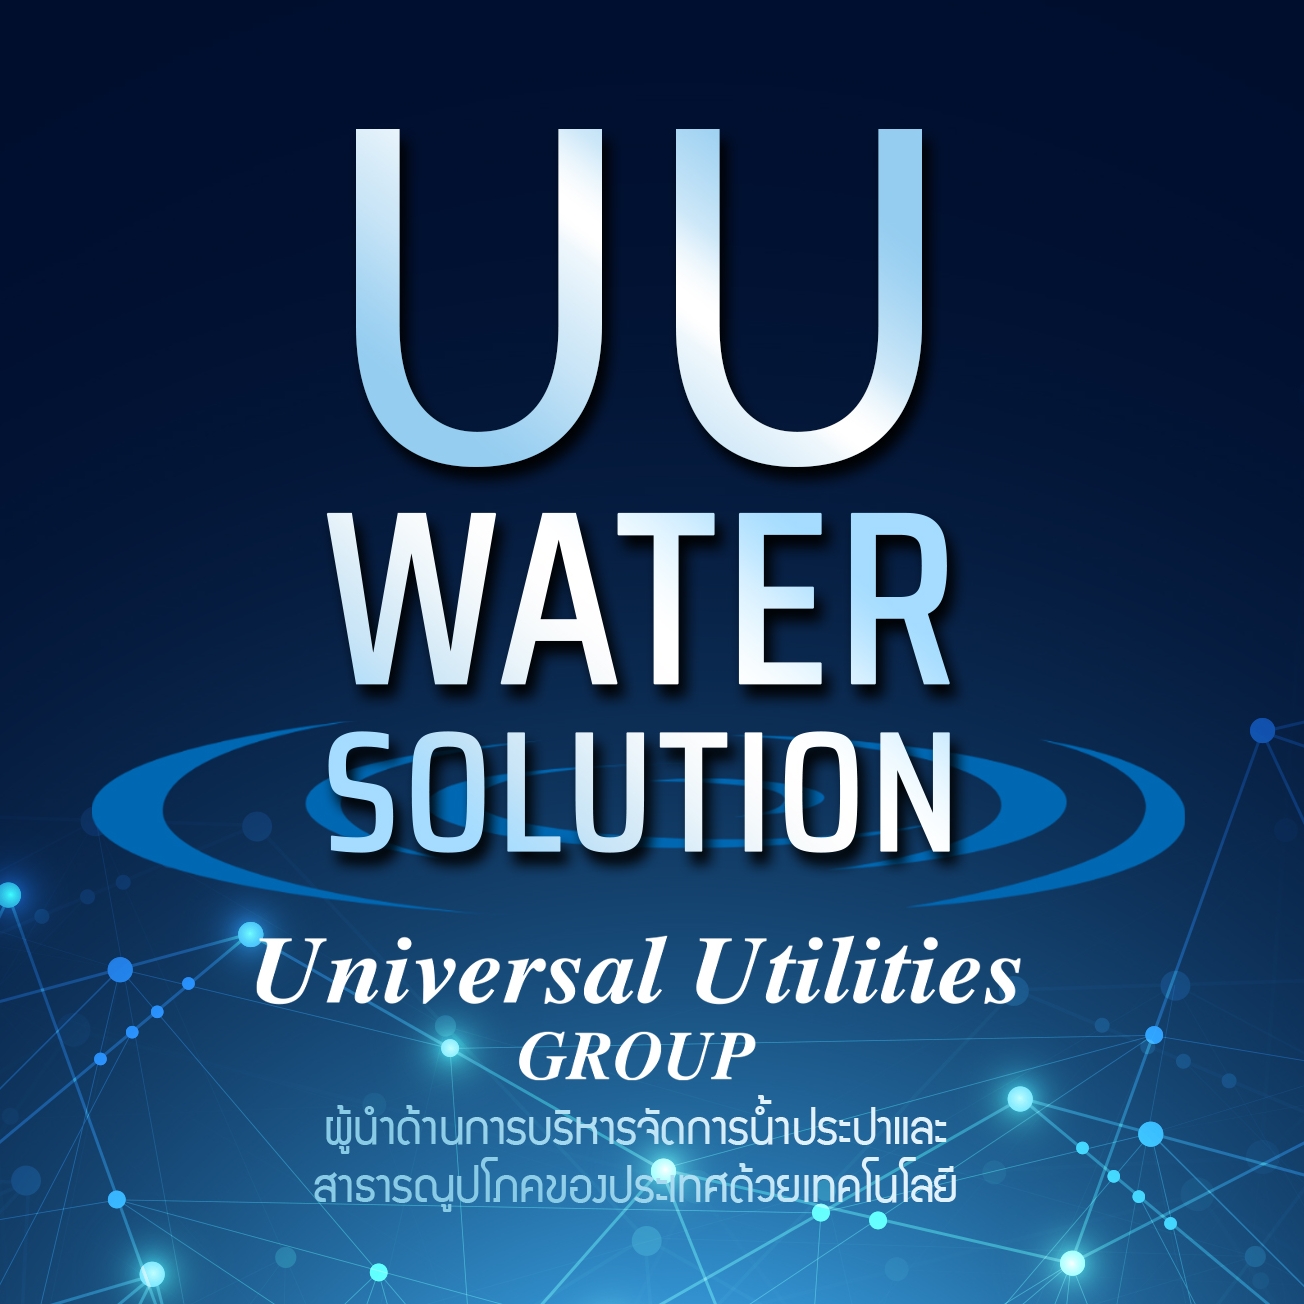 Universal Utilities